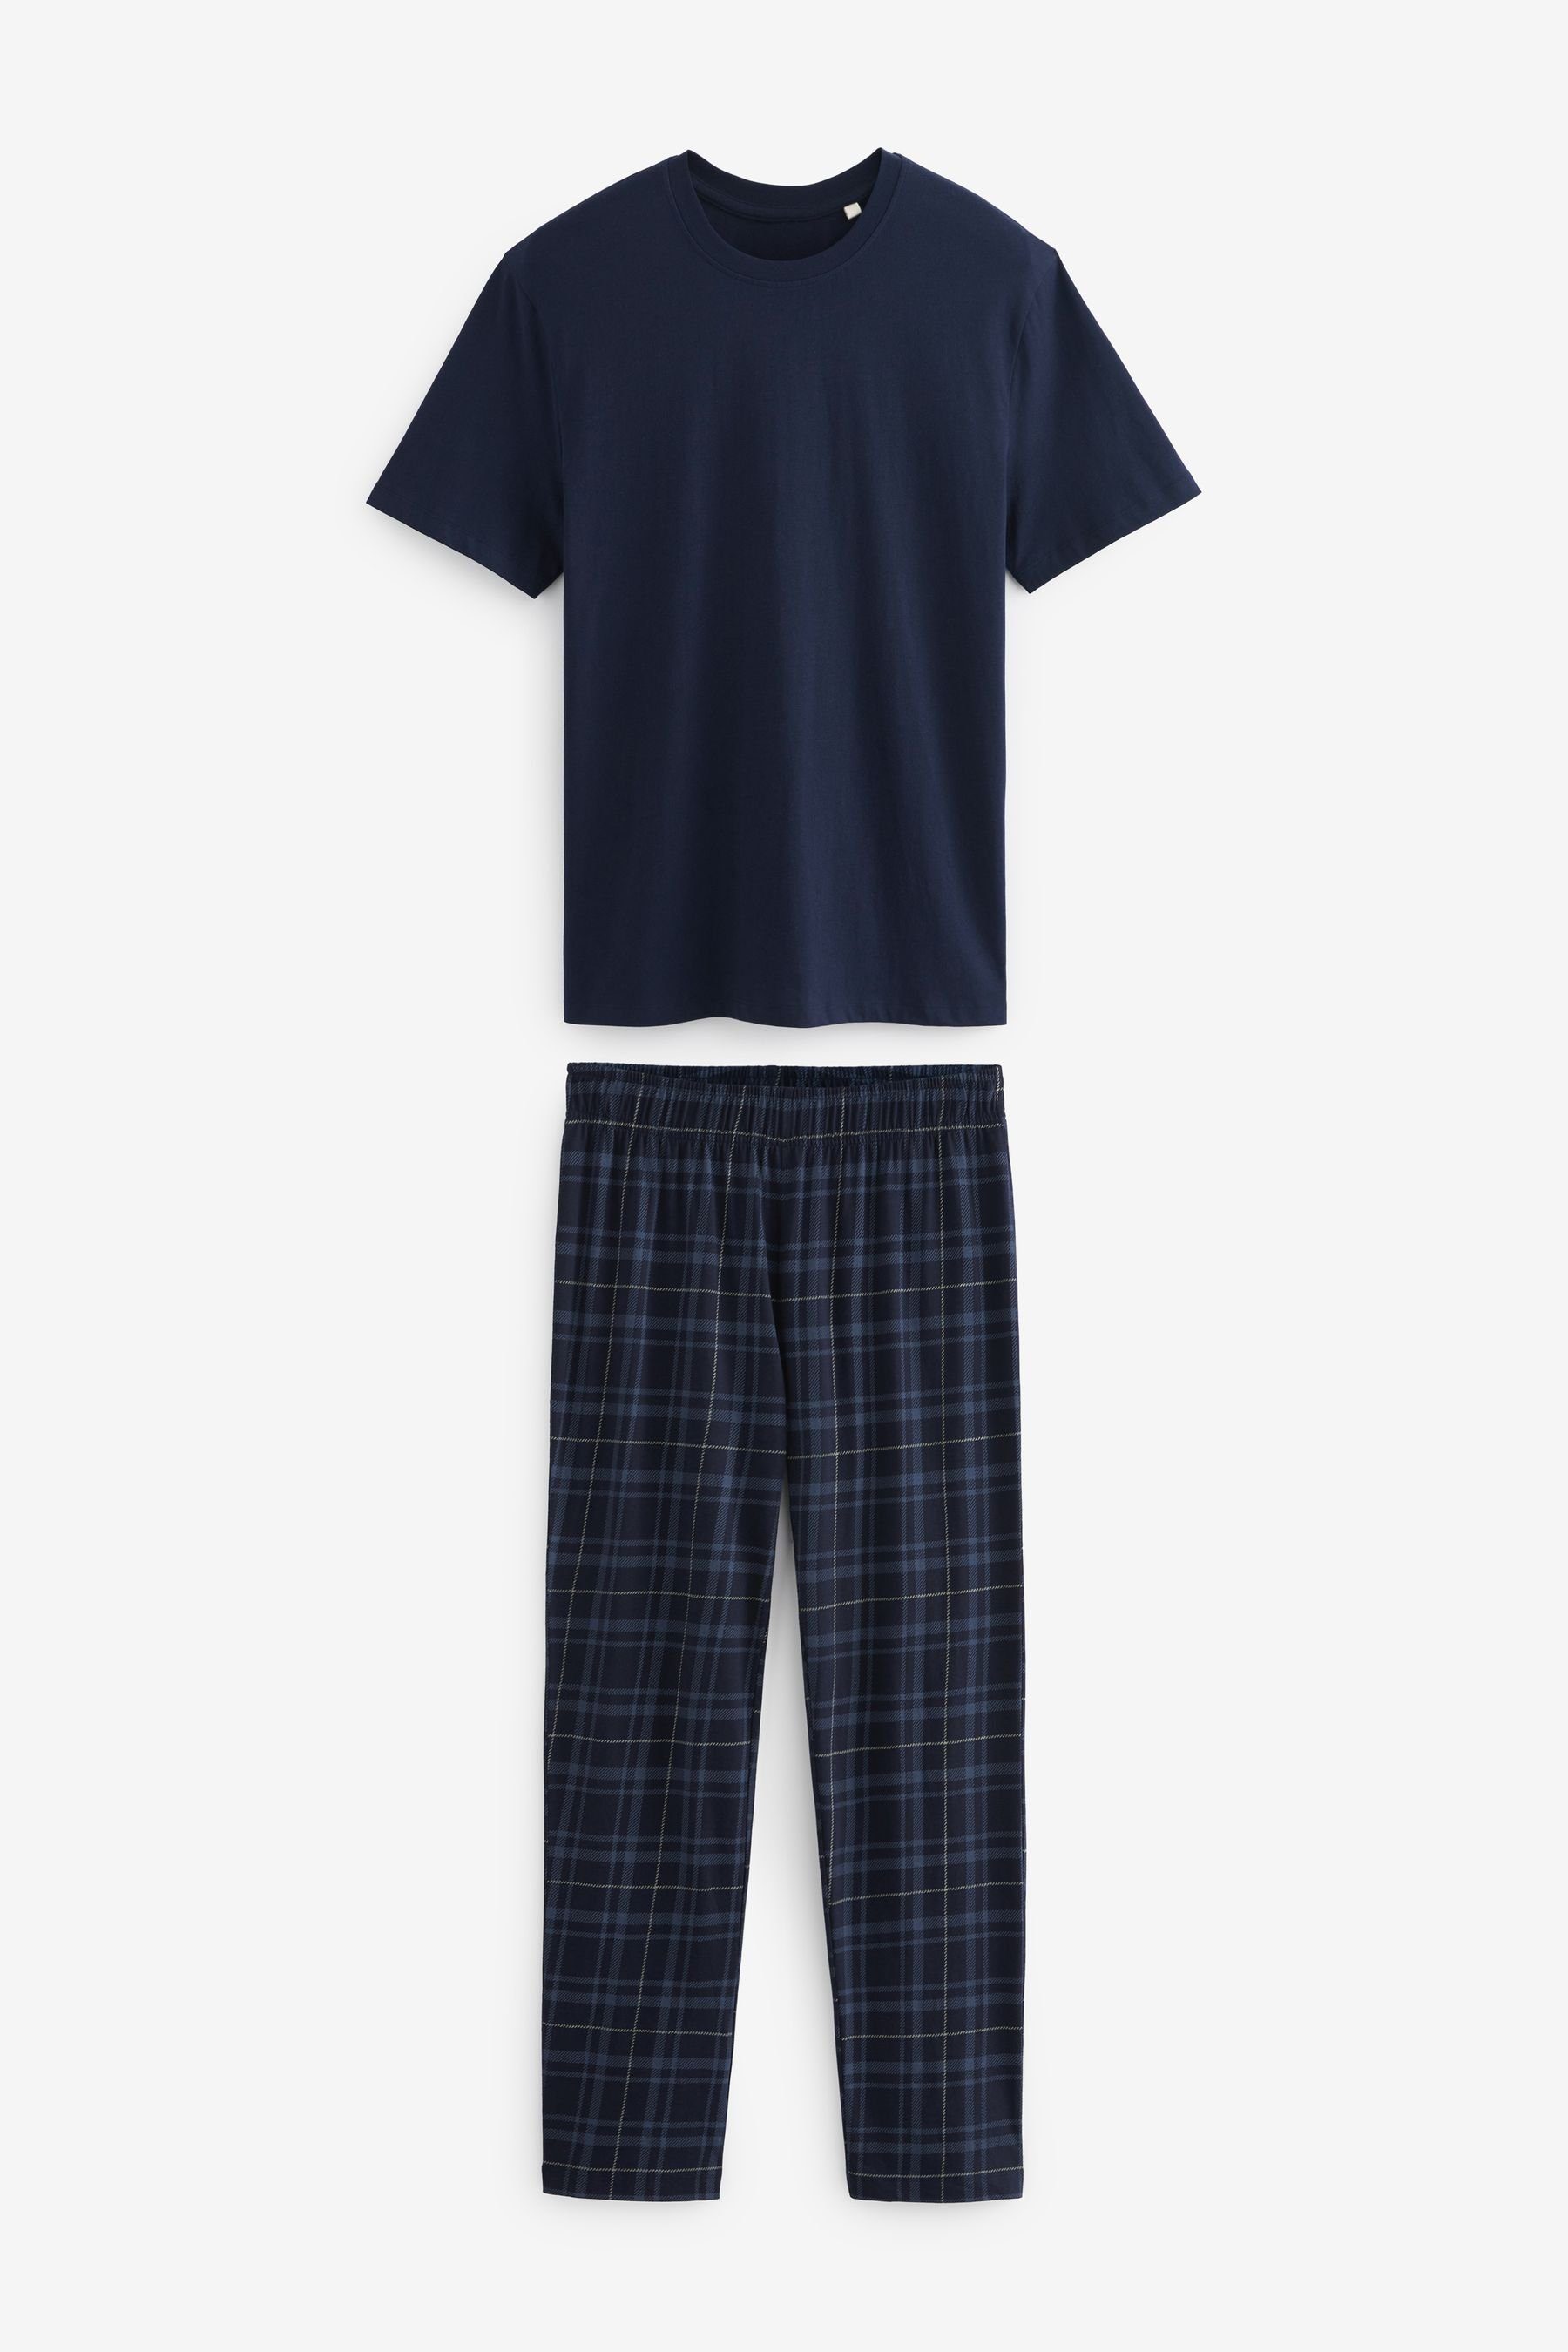 Next Pyjama Pyjama-Set aus Baumwolle (2 tlg) Navy Blue Check